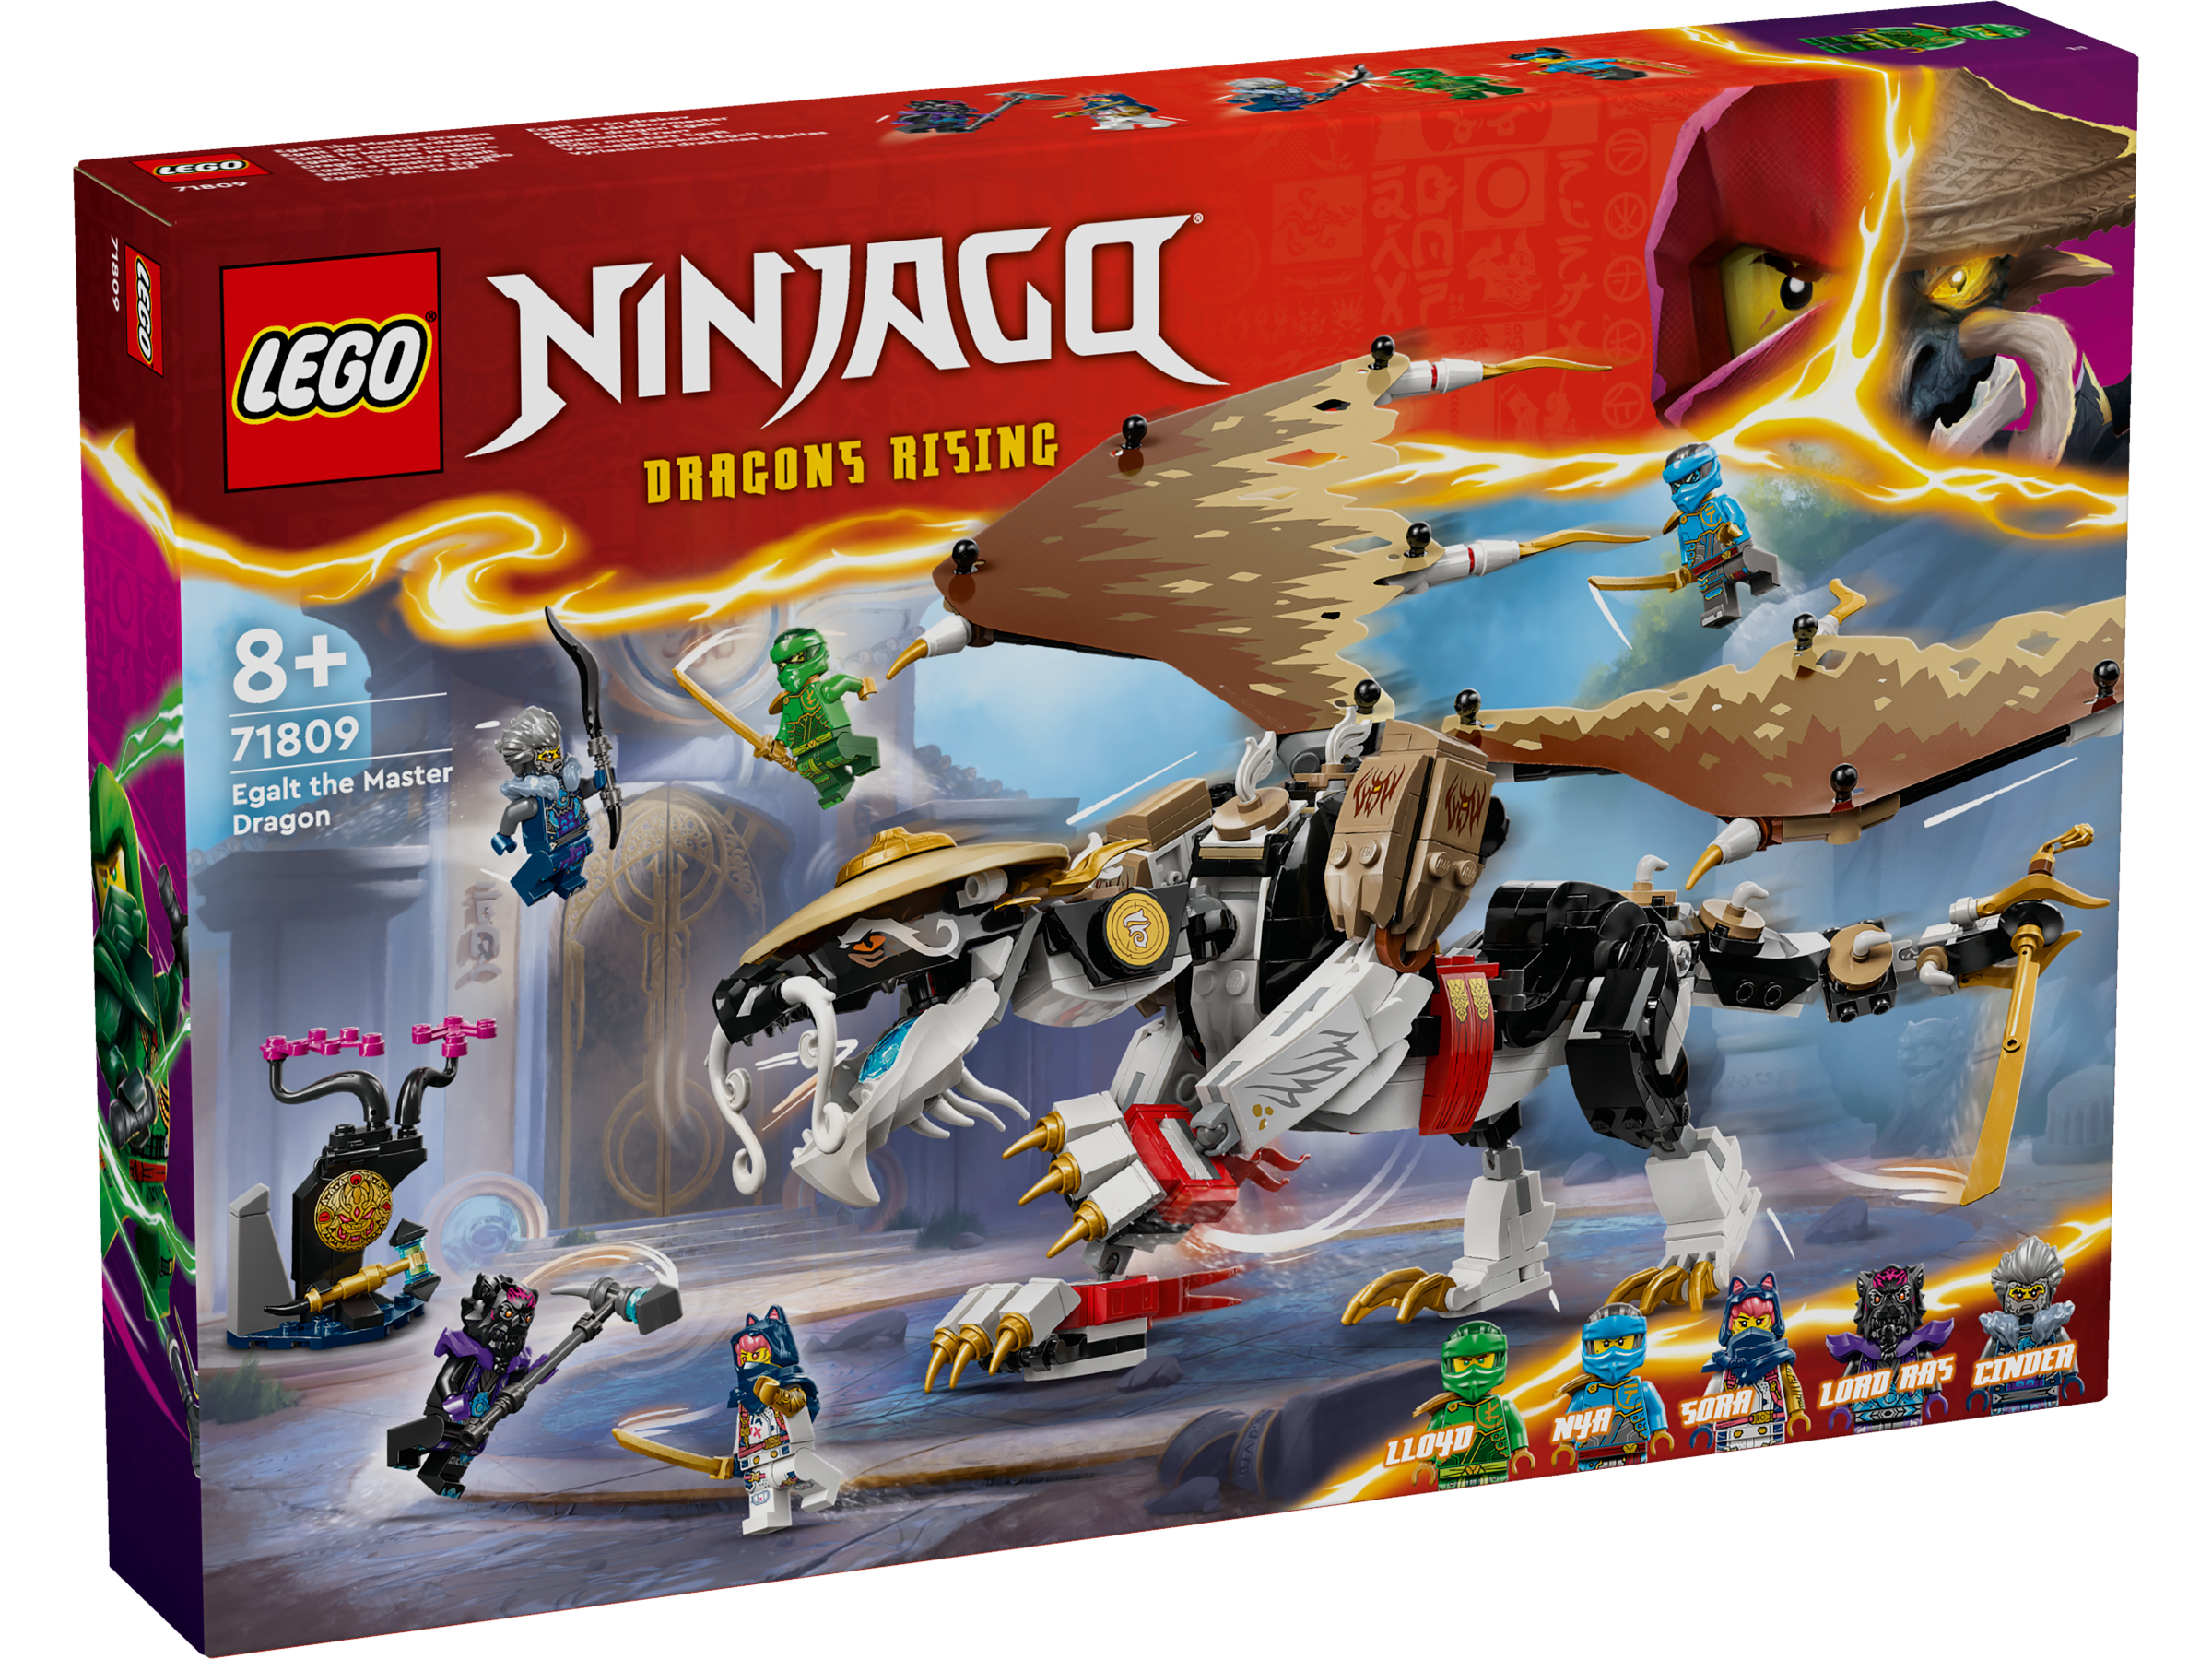 Ninjago: Dragons Rising, Ninjago Wiki